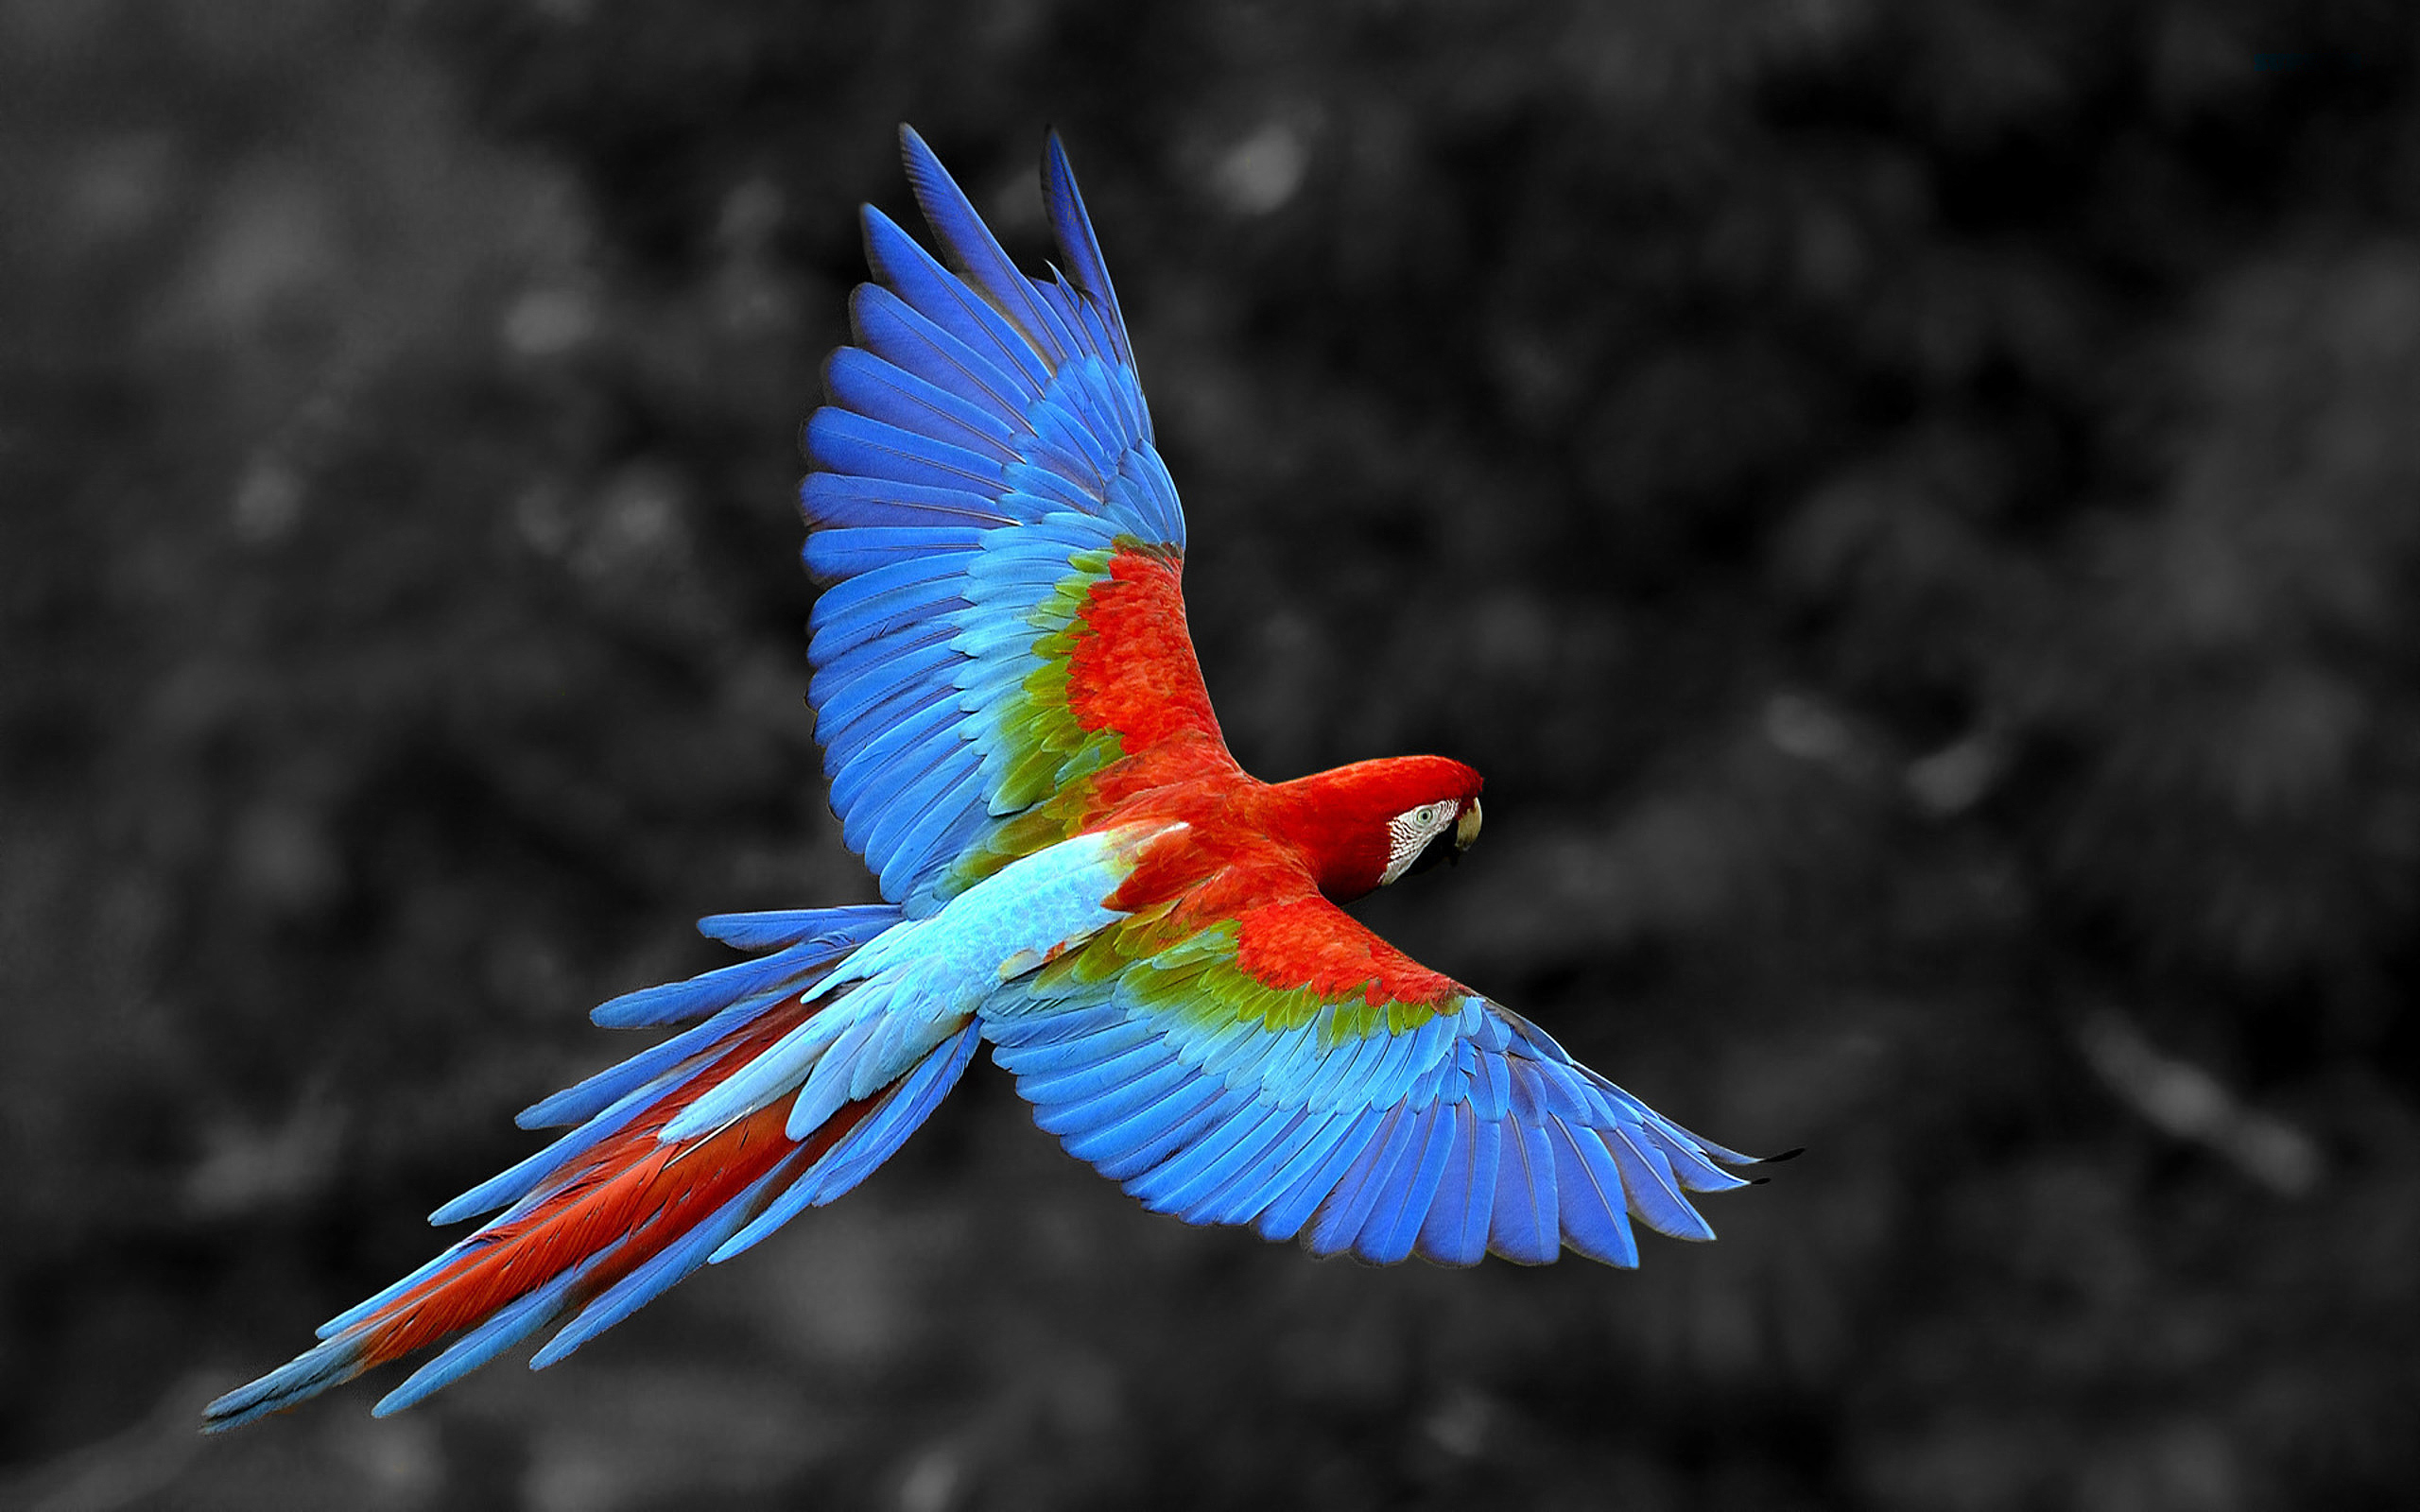 Mobile Desktop Background Hd Images Of Colorful Birds